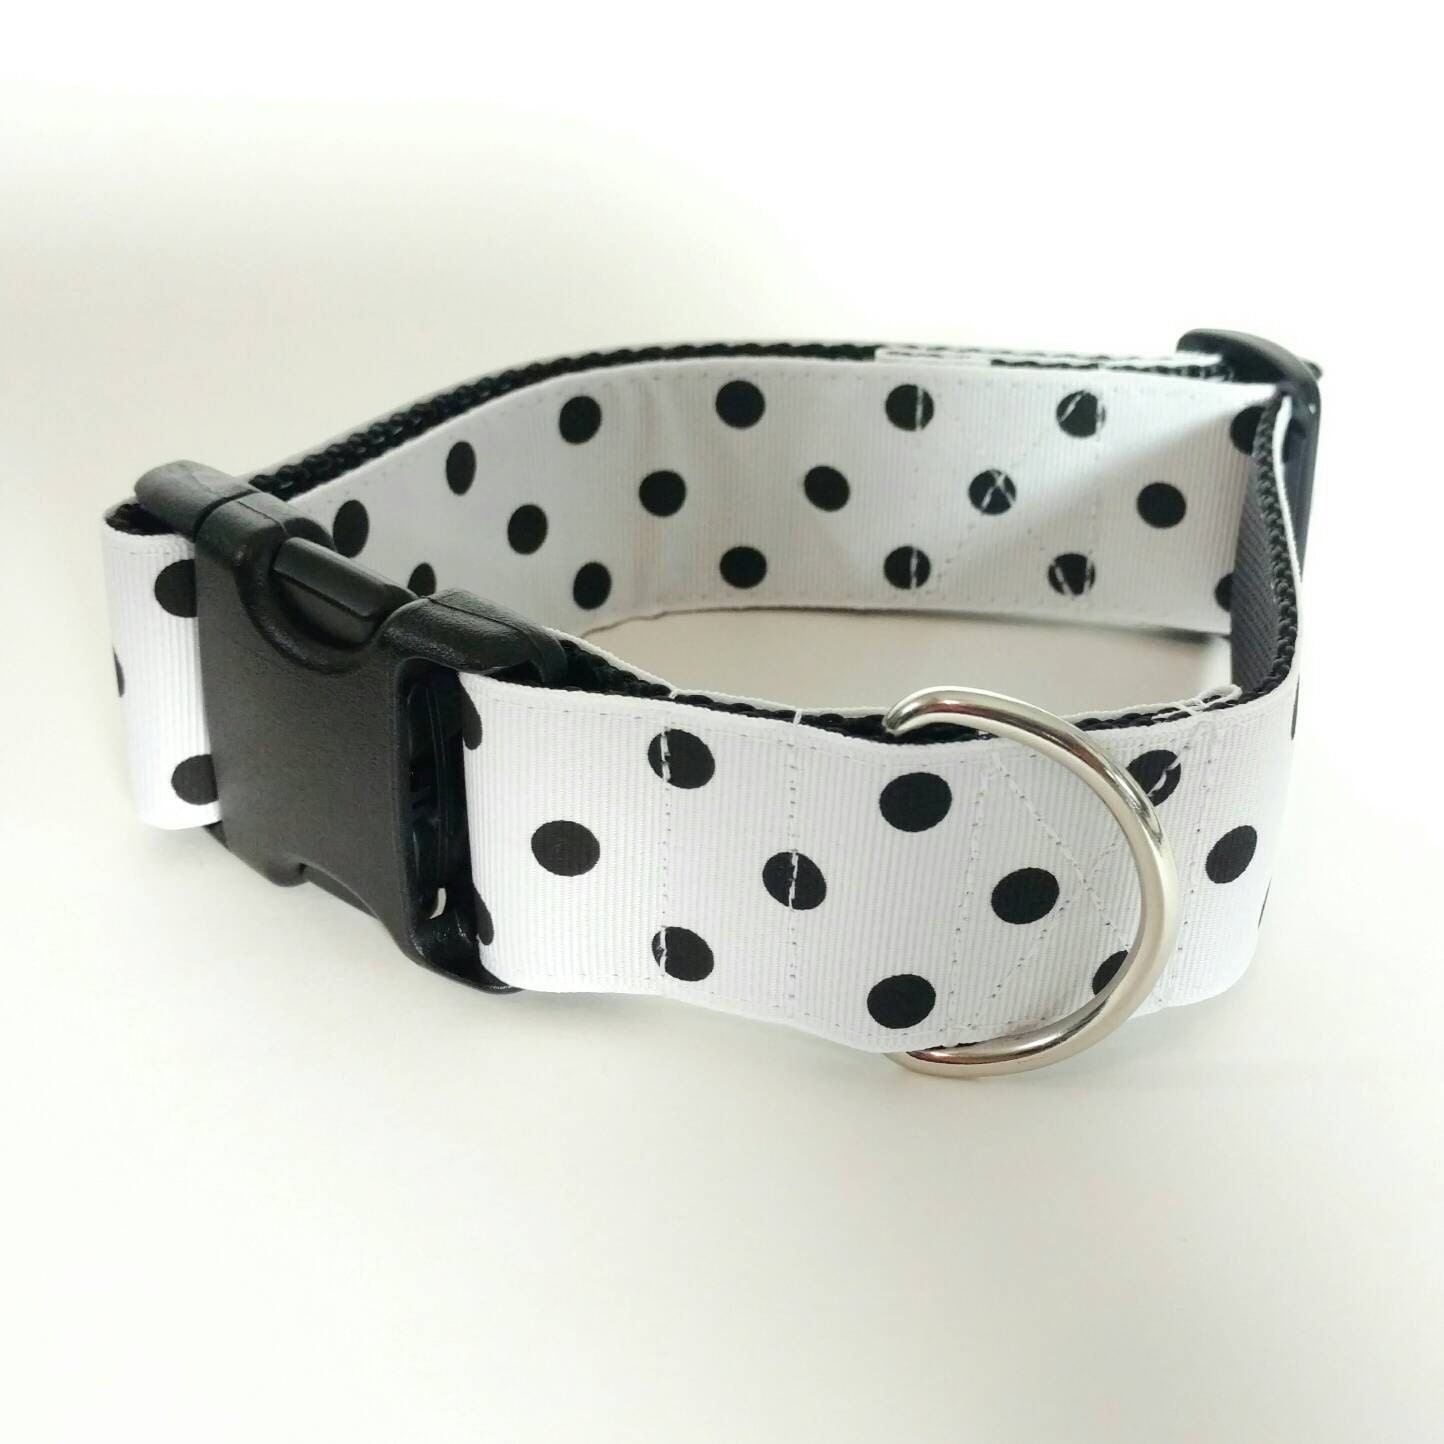 Black and white dog collar